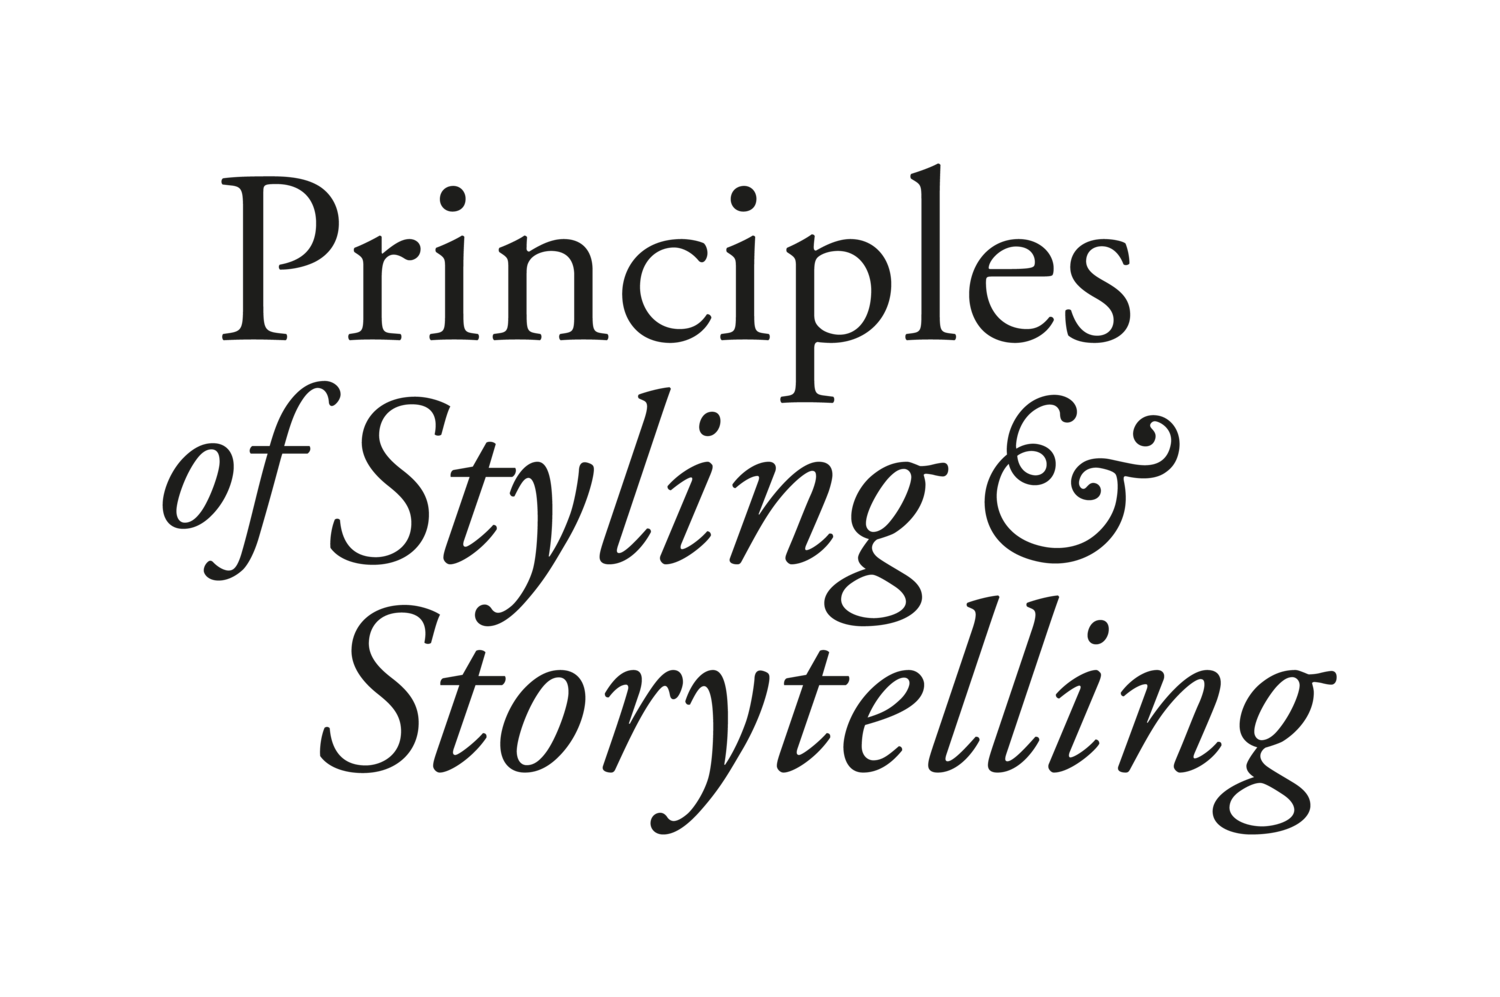 Principles of Styling &amp; Storytelling